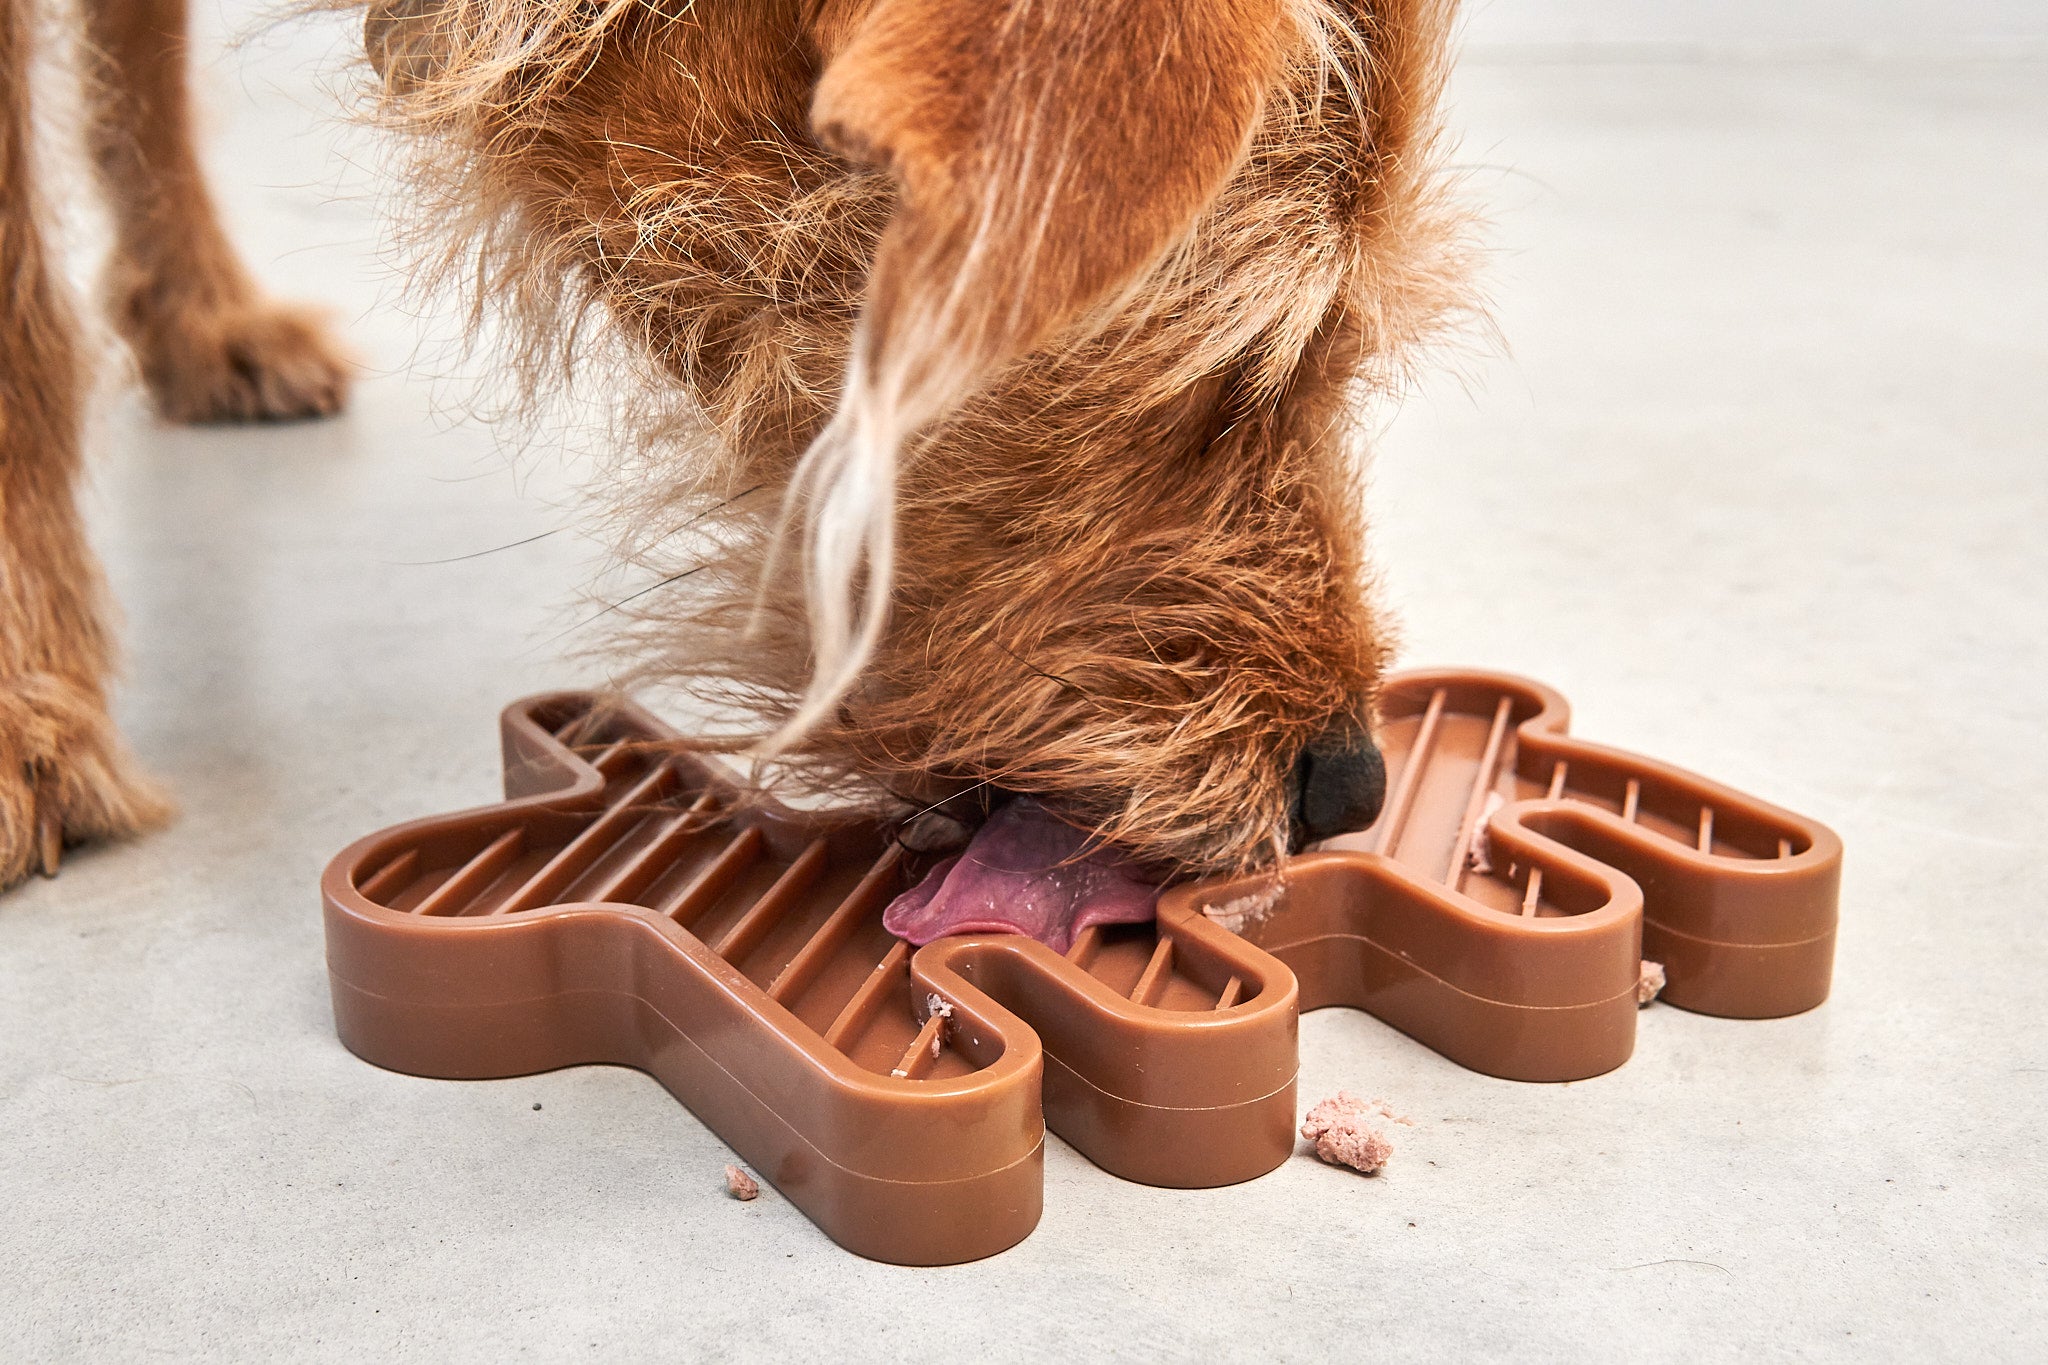 MiaCara Lepre Hundespielzeug Sandelholz modernes Schleckspielzeug fuer Hunde